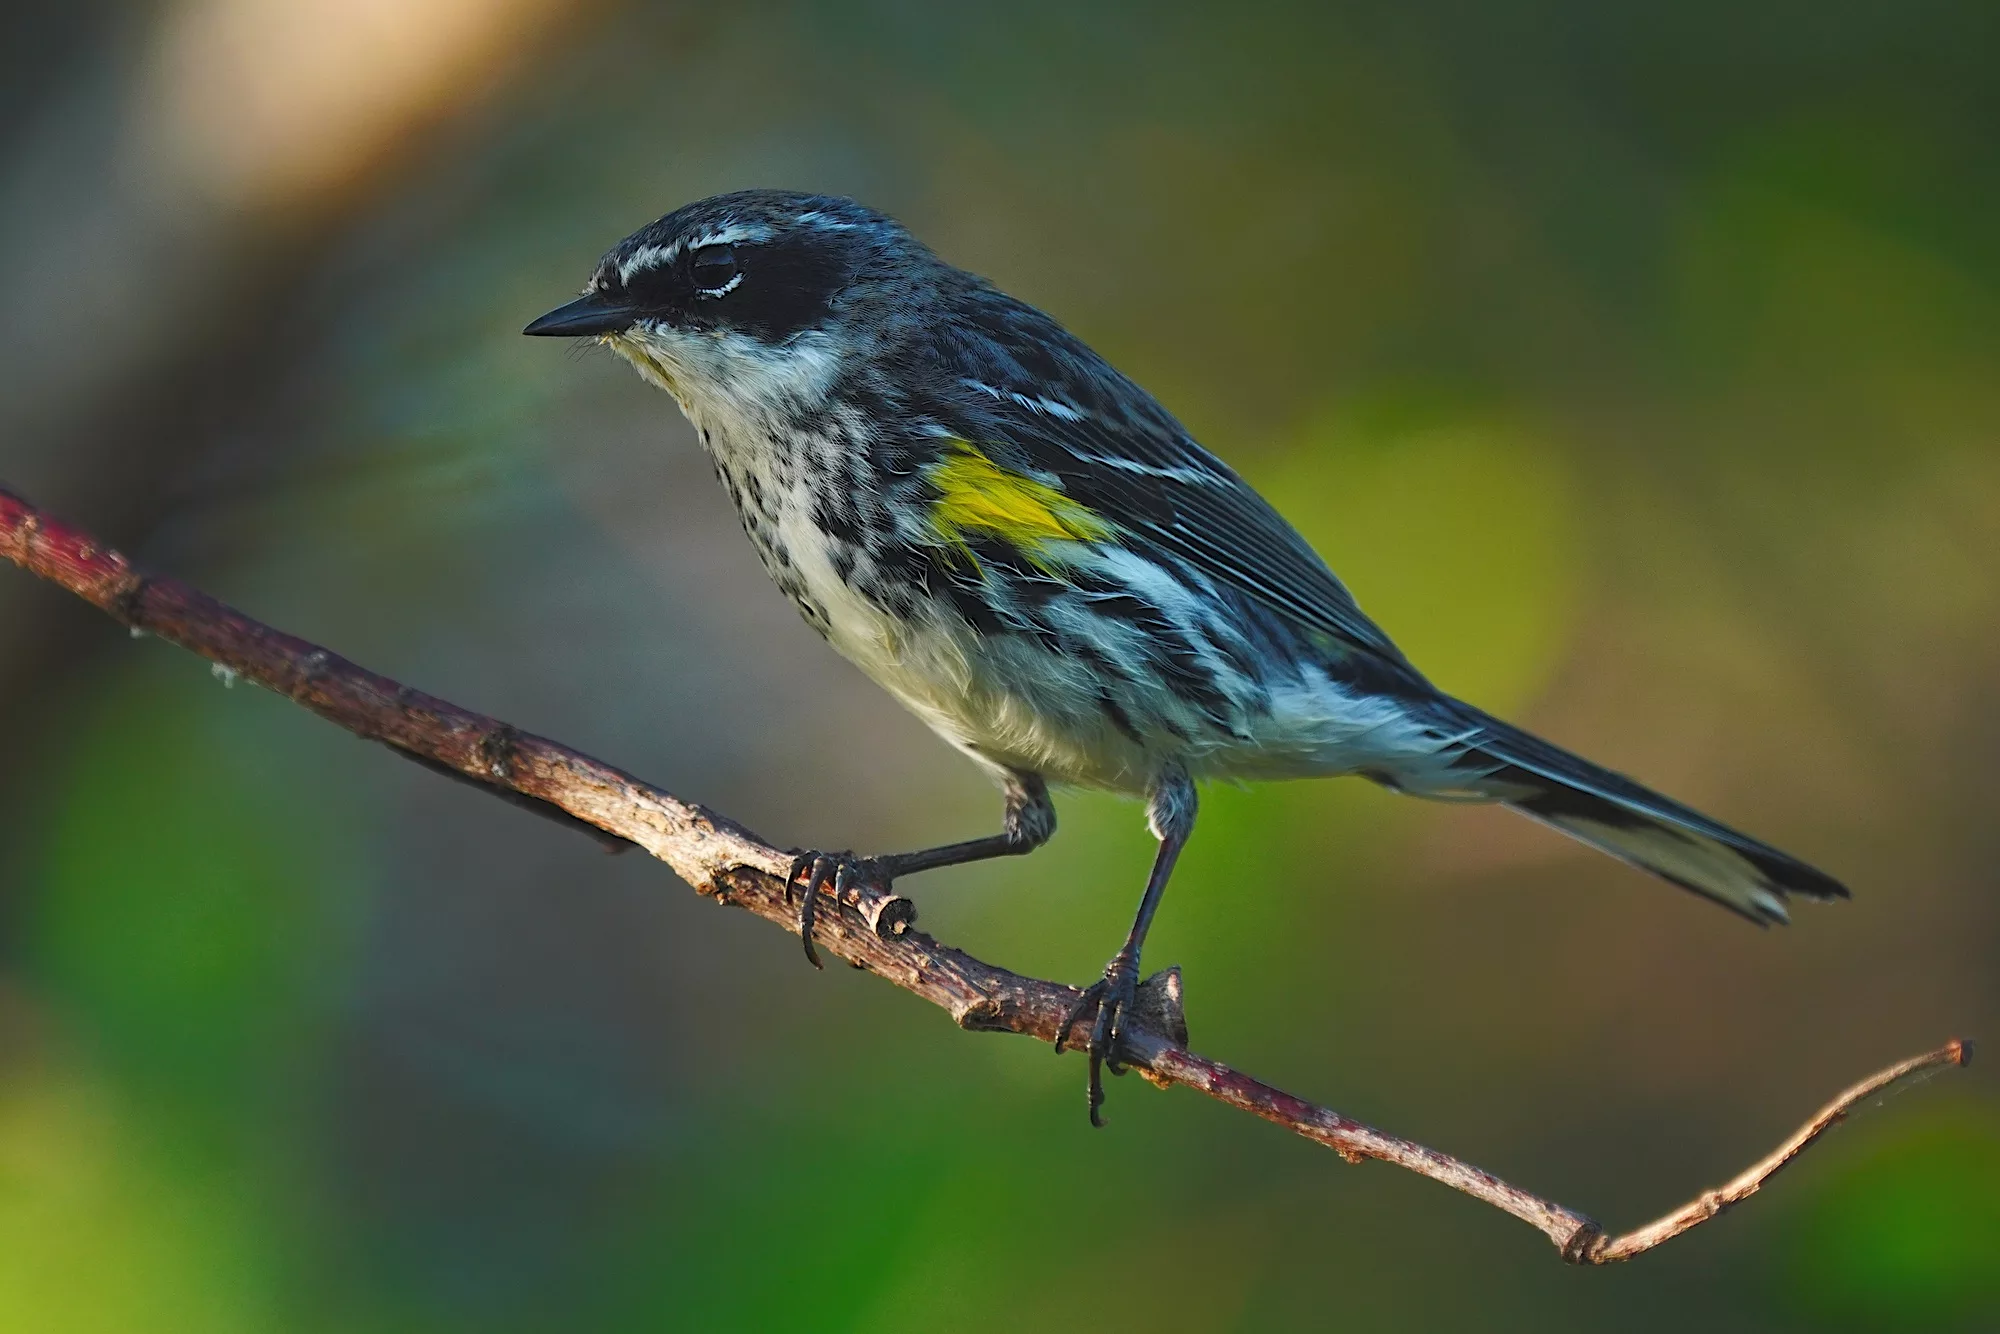 Florida birds photo workshop warbler